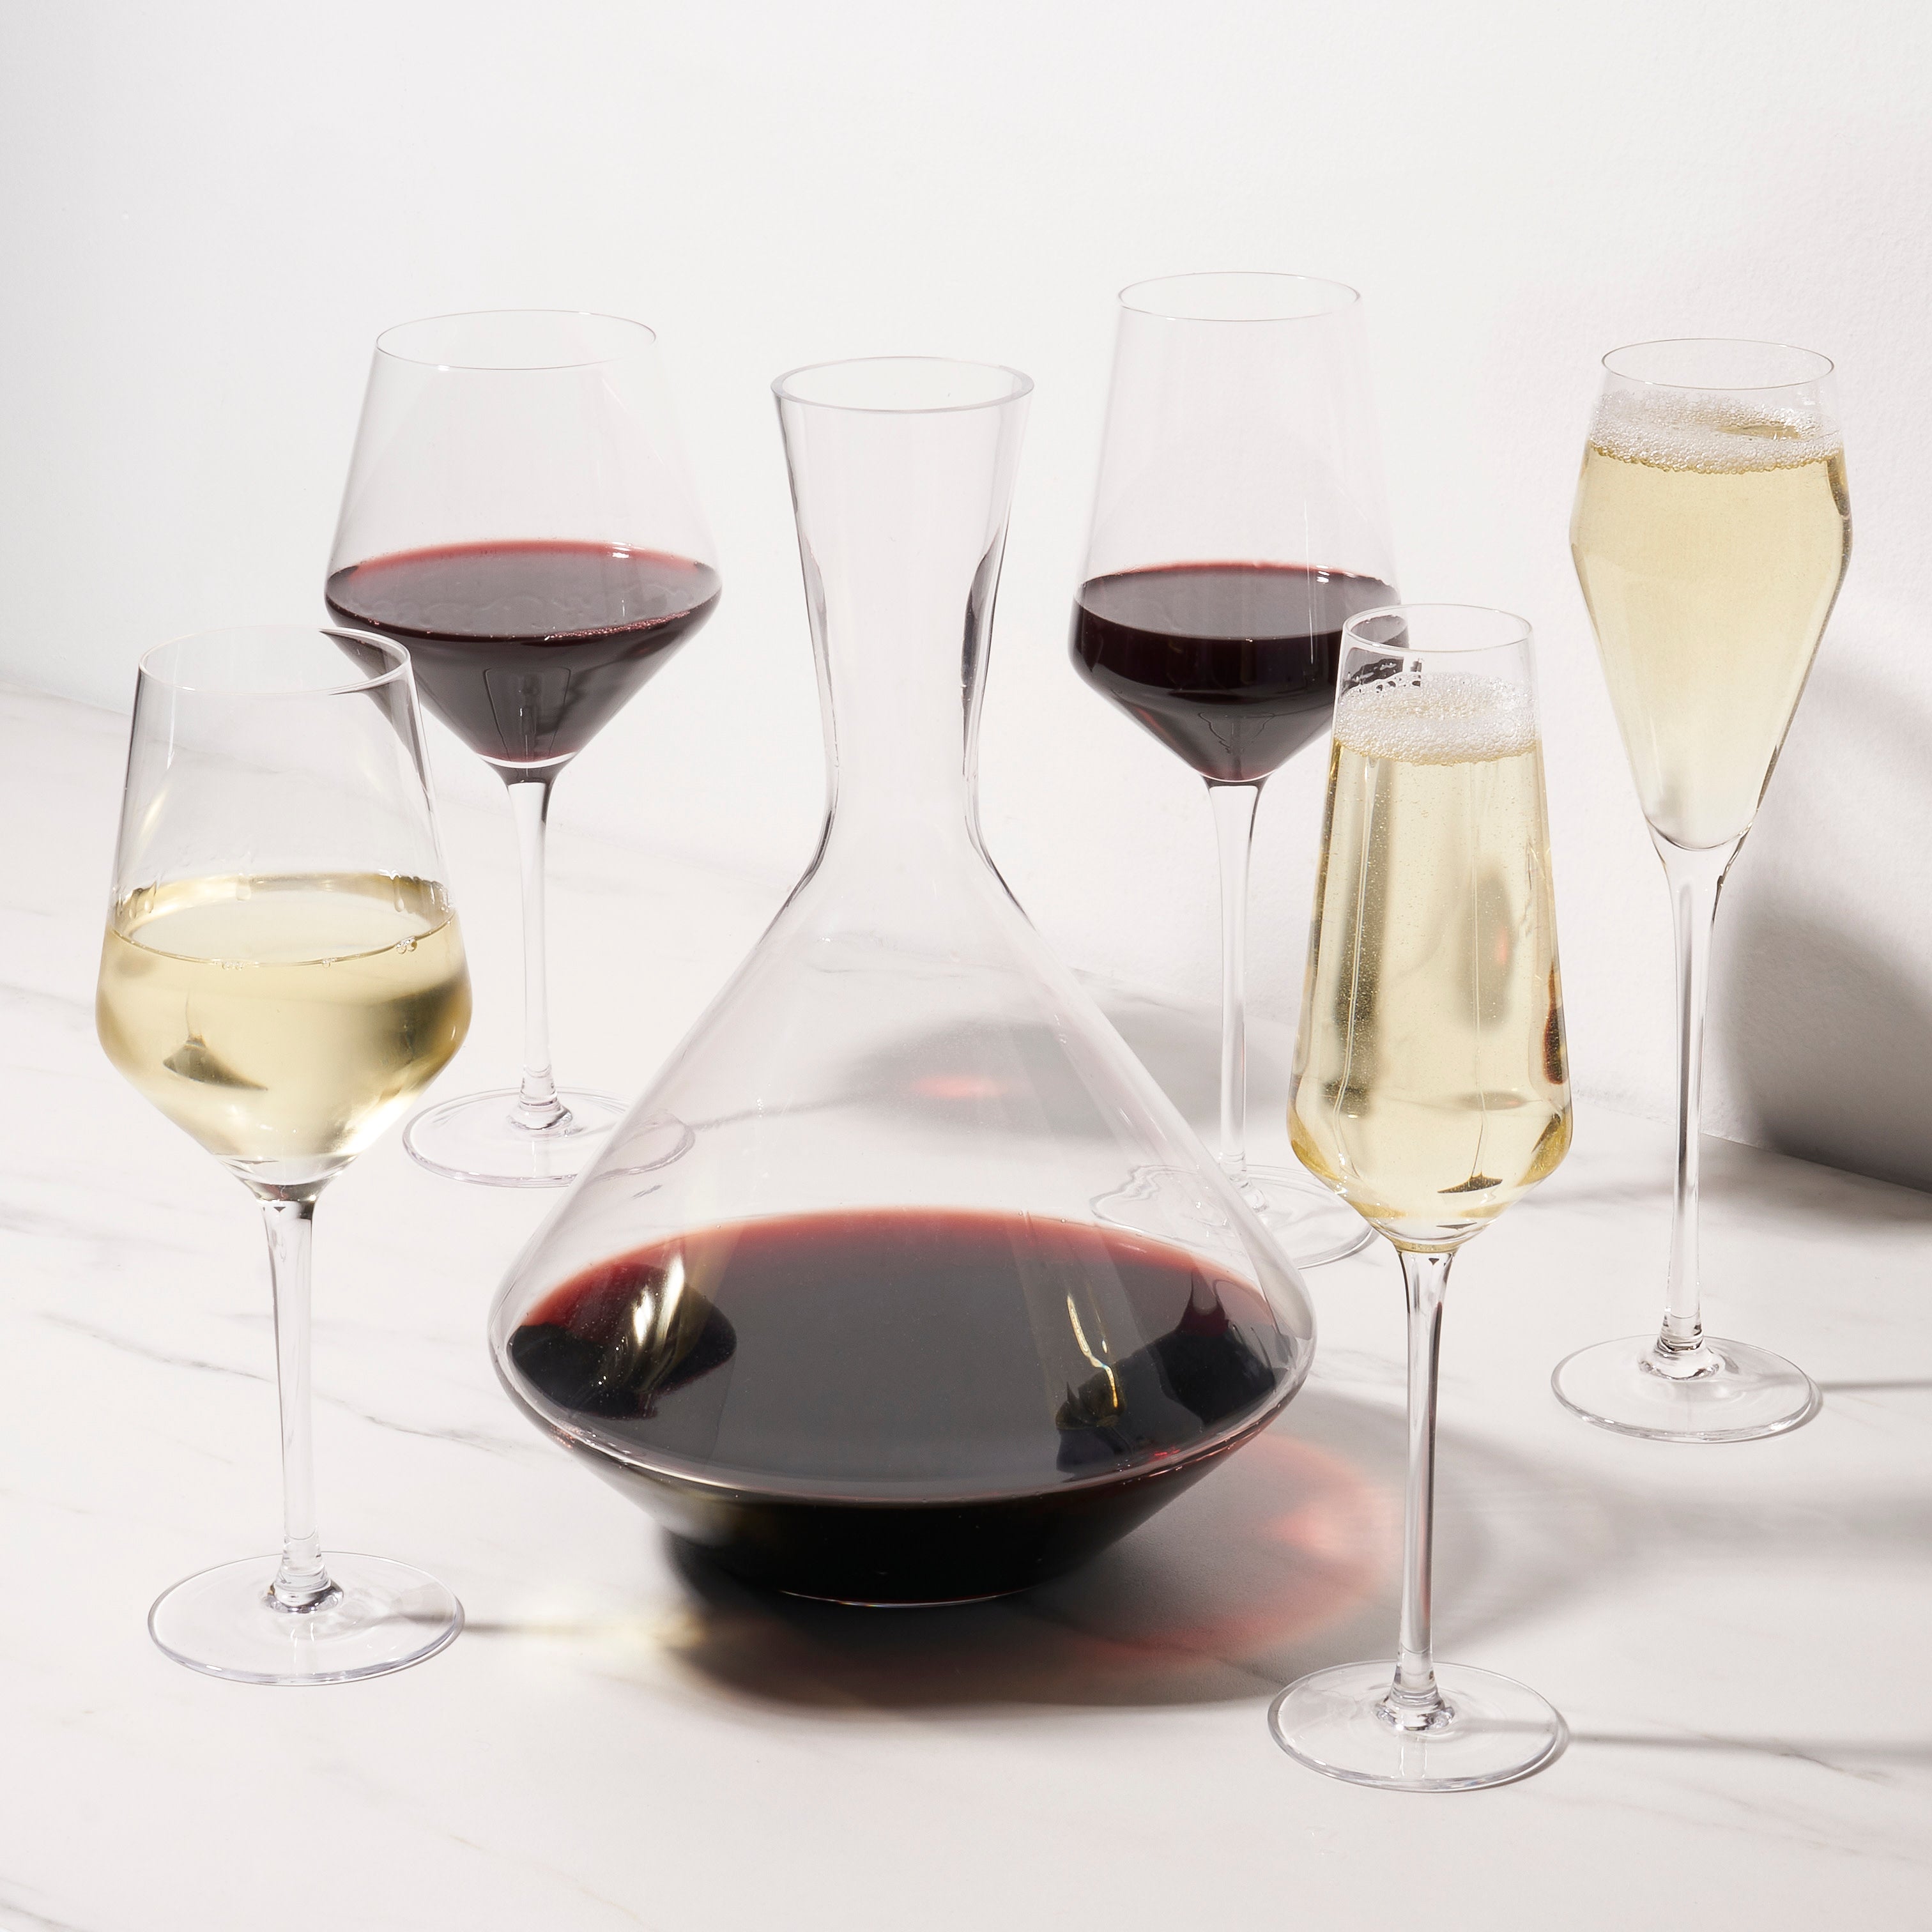 Viski Raye Angled Crystal Bordeaux Wine Glasses Set of 2 - Premium